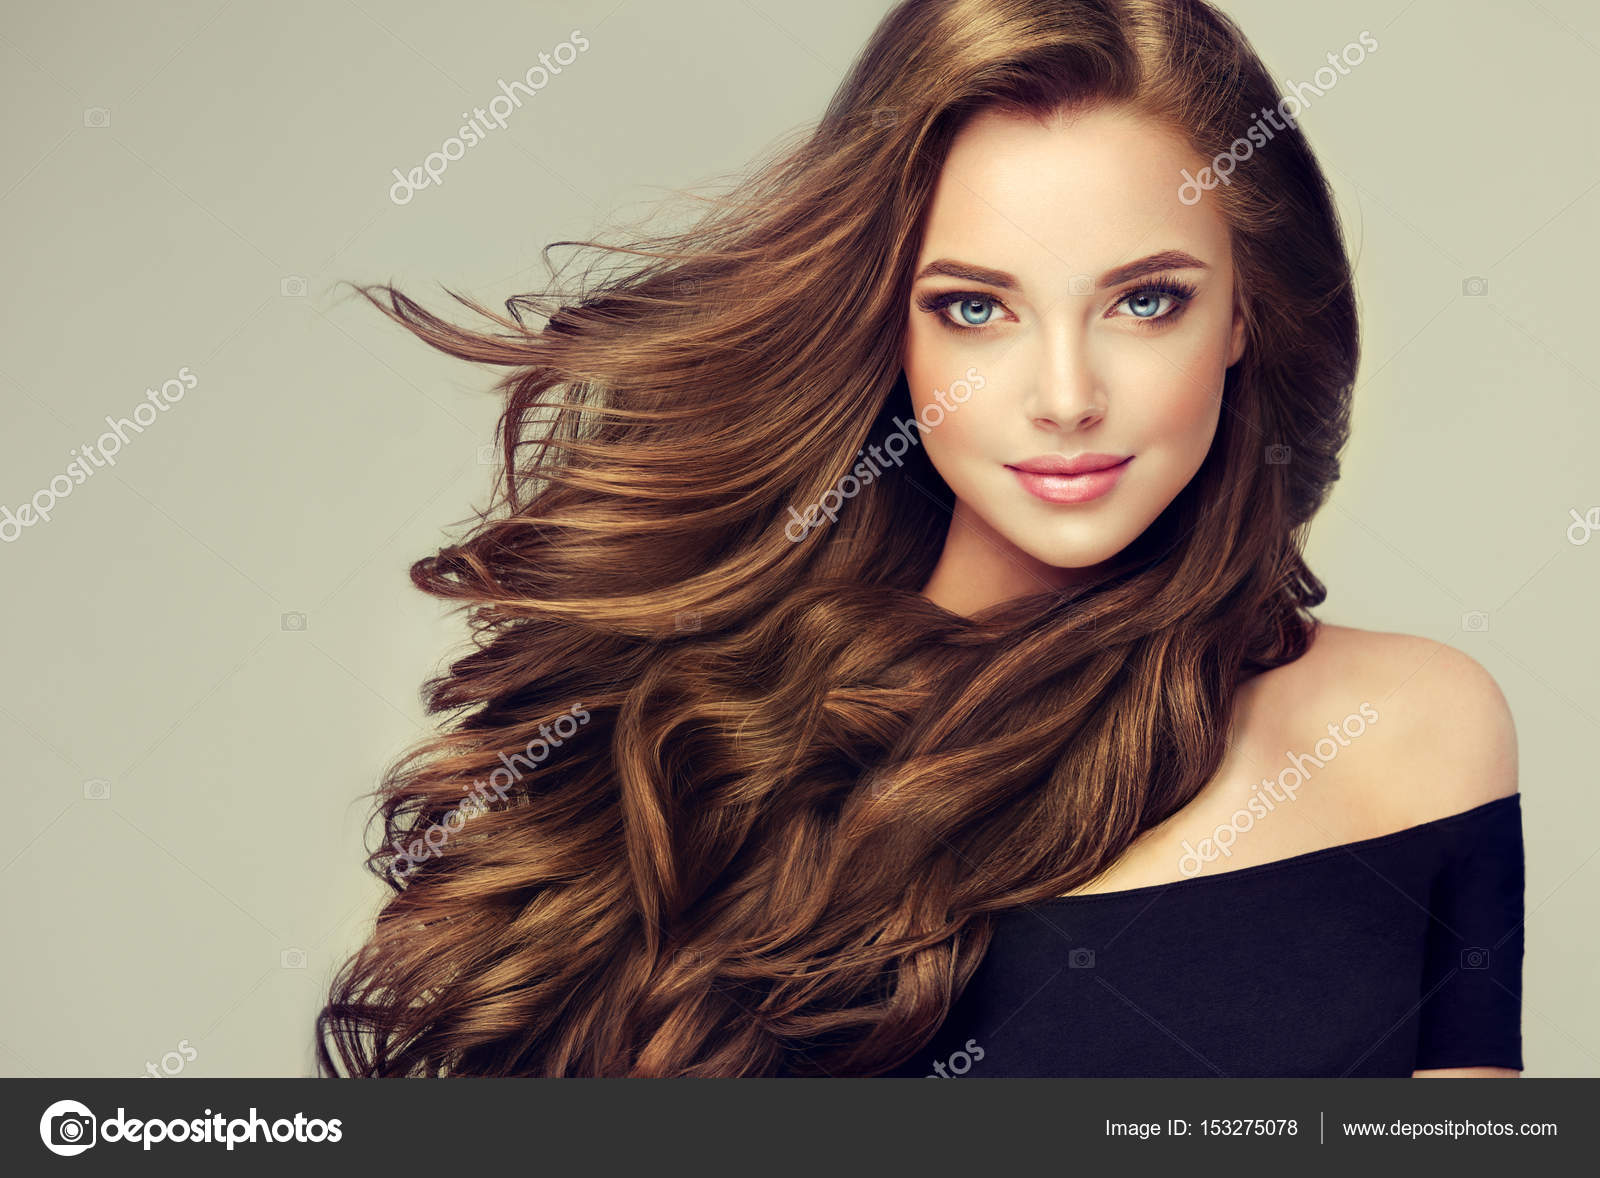 Hair care Stock Photos, Royalty Free Hair care Images | Depositphotos